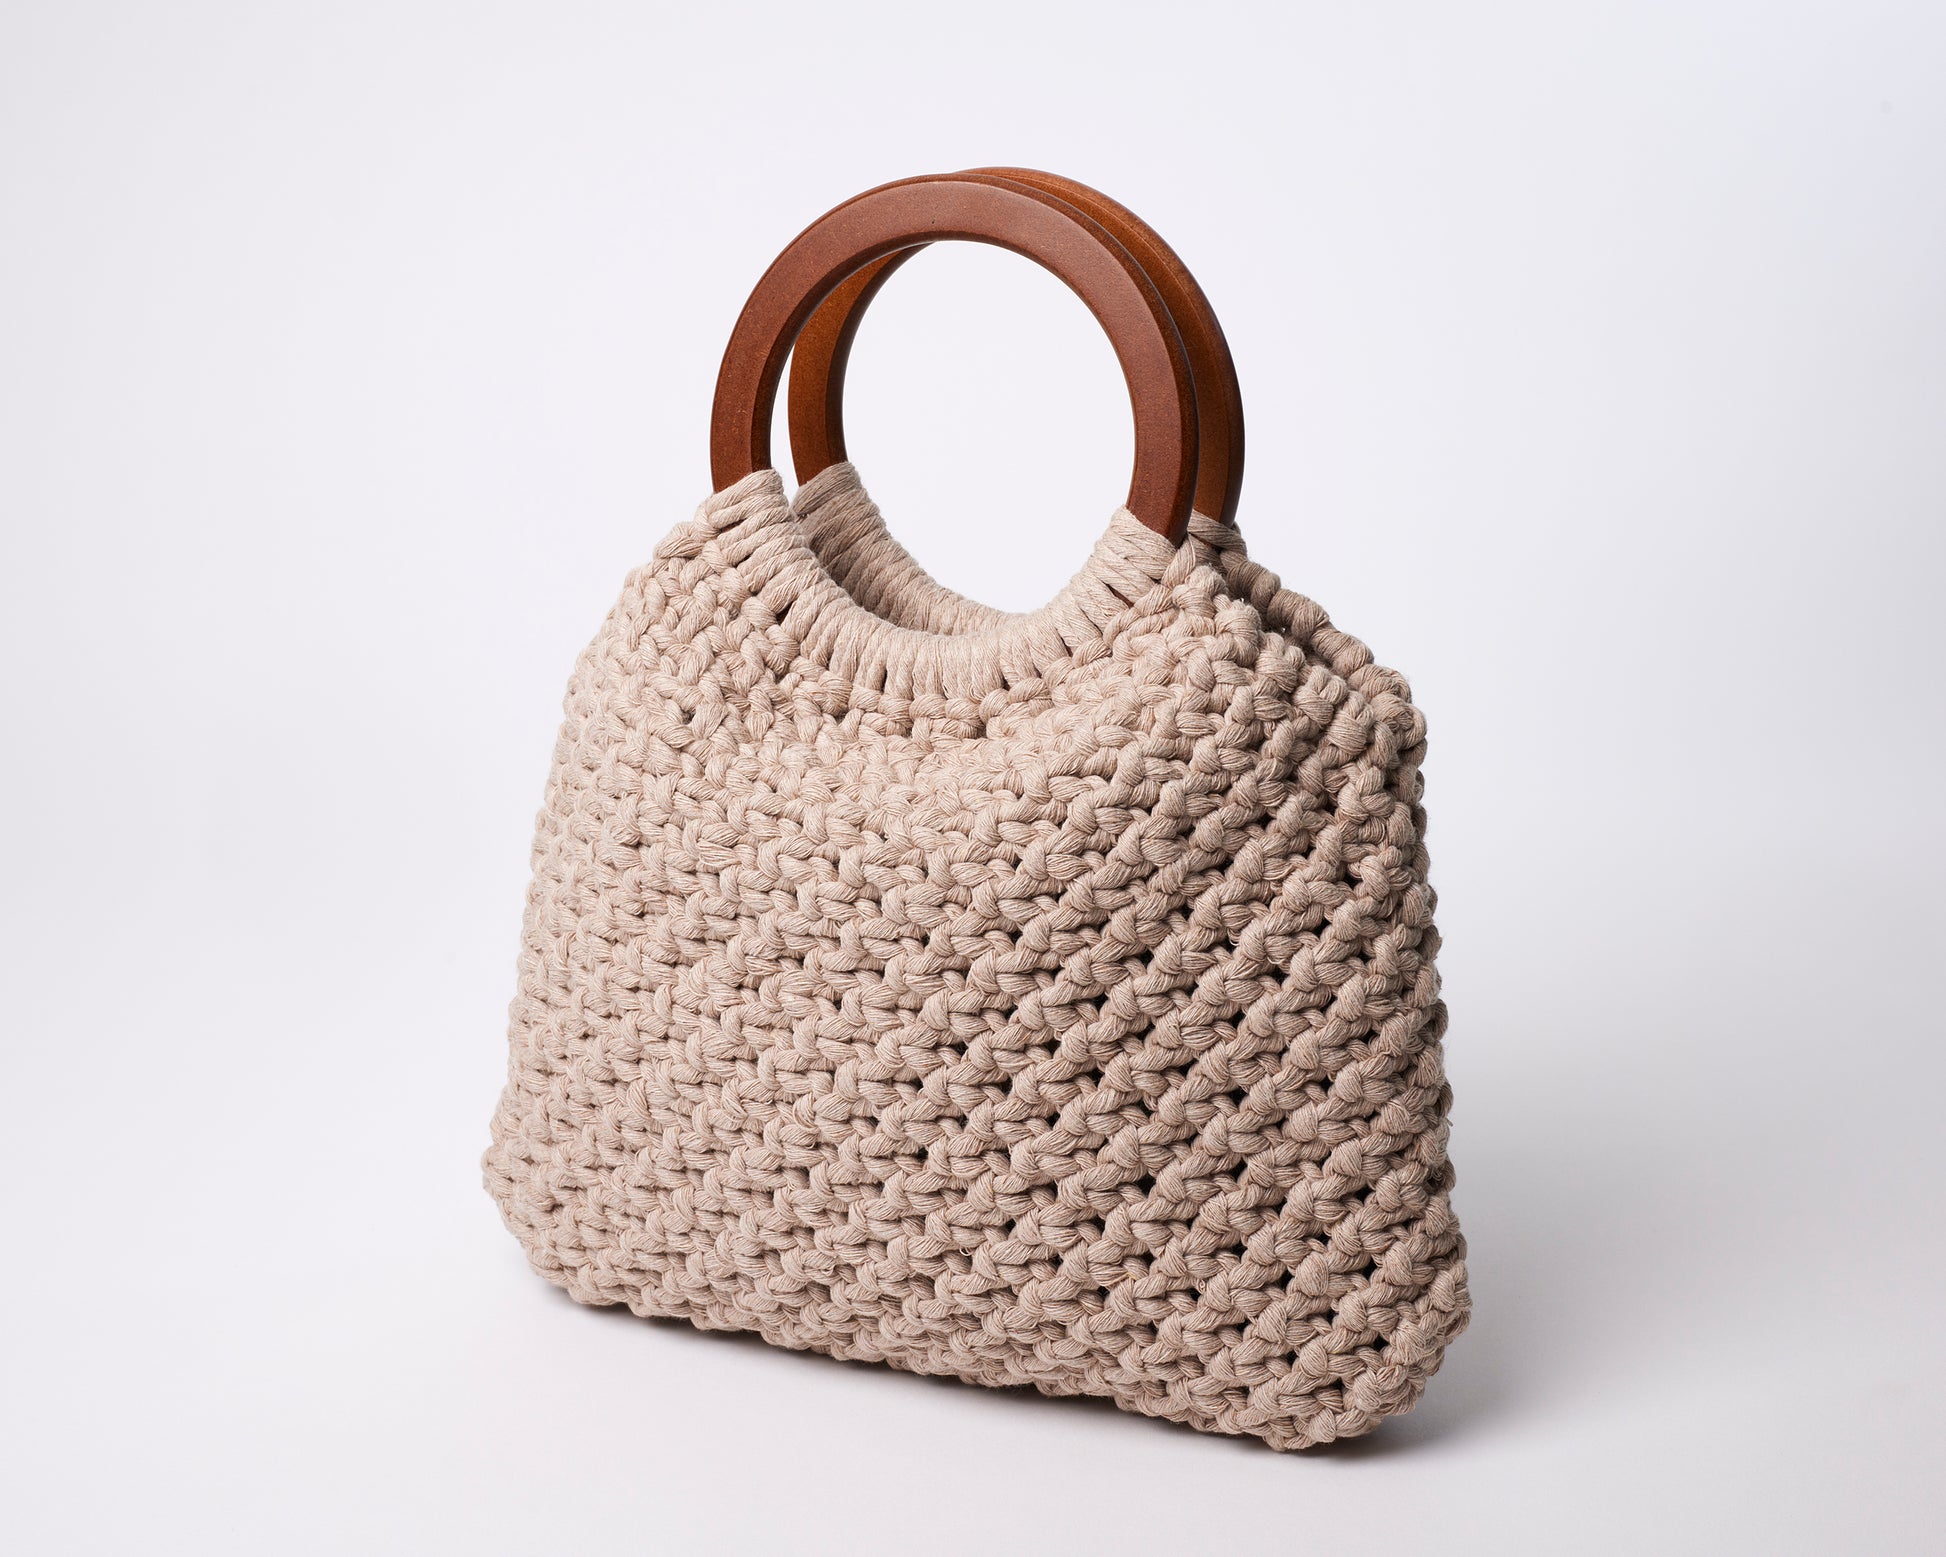 Crochet Tote with Wooden Handles, Handmade